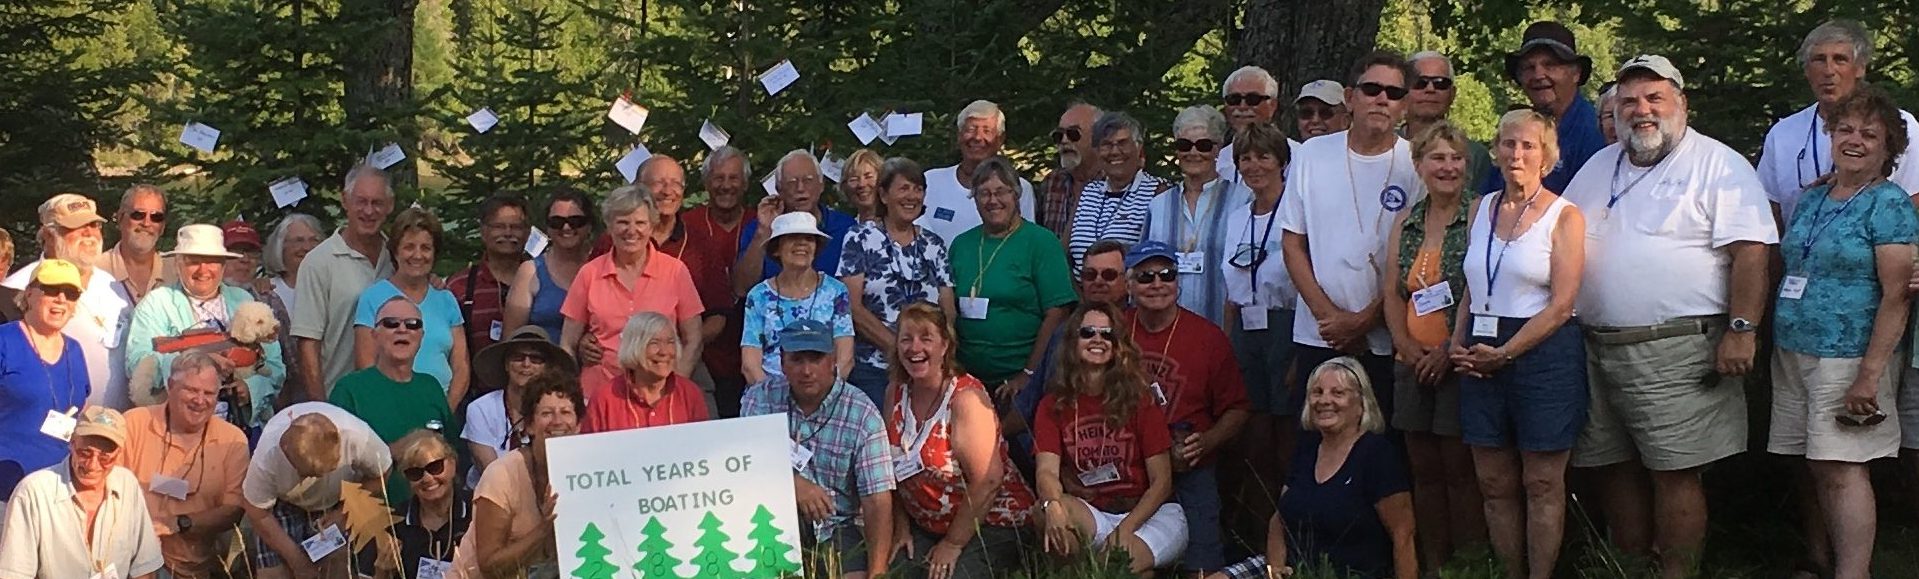 Great Lakes Cruising Club 2016 Wilderness Rally